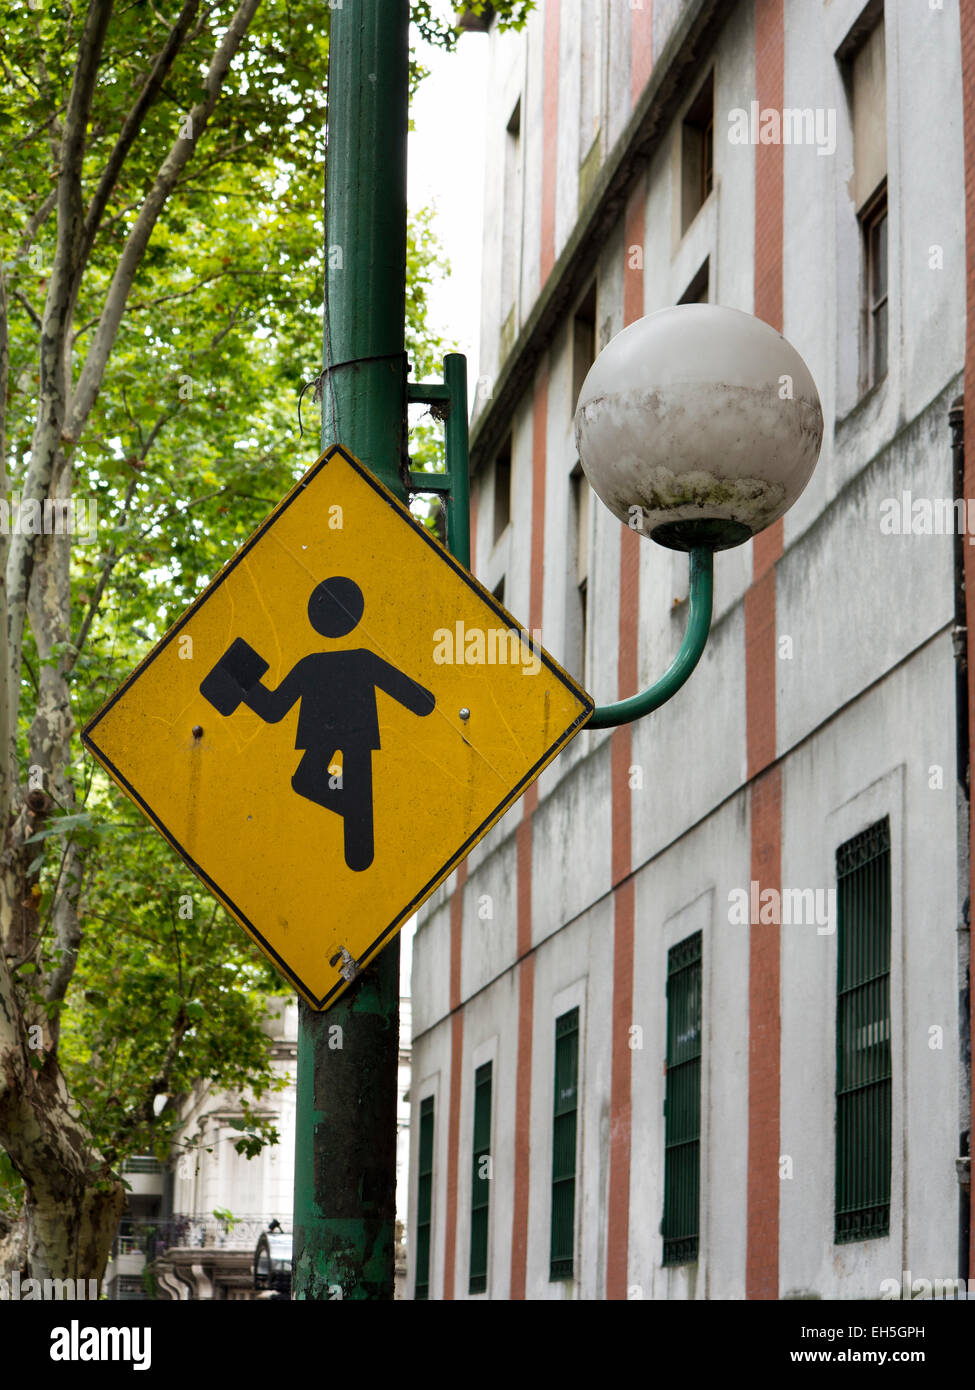 Argentina, Buenos Aires, Almagro, Hipolito Yrigoyen, school warning sign on lamp post Stock Photo